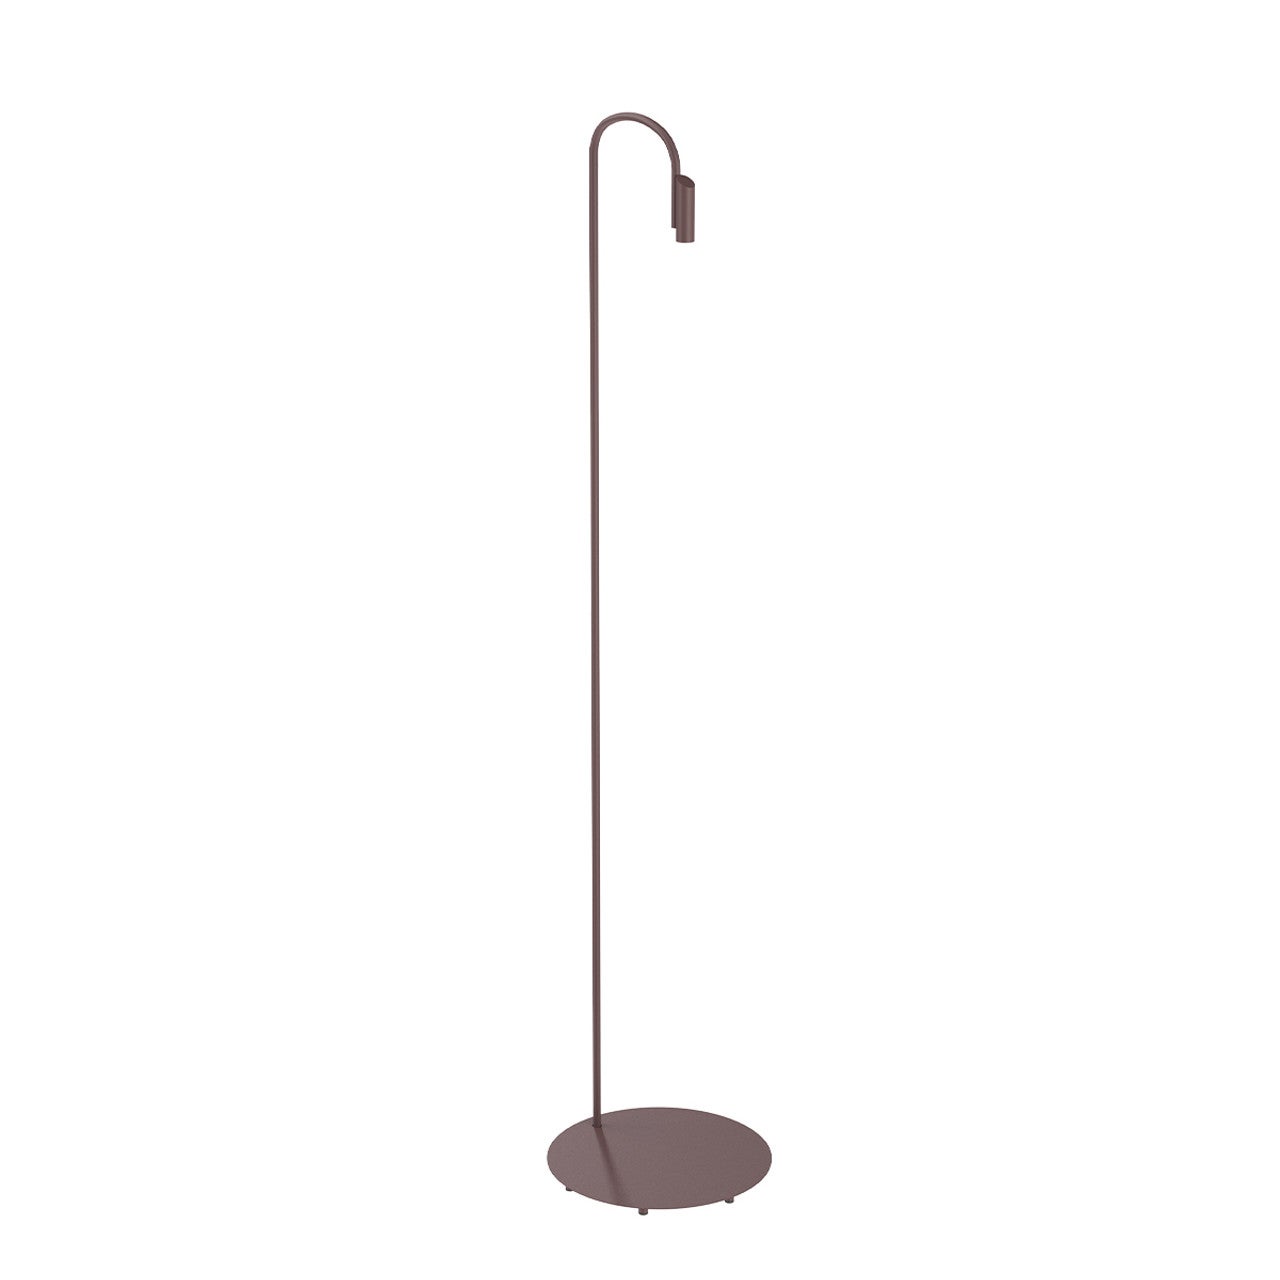 Flos Caule 3000K Model 5 Outdoor Floor Lamp in Deep Brown with Regular Shade For Sale